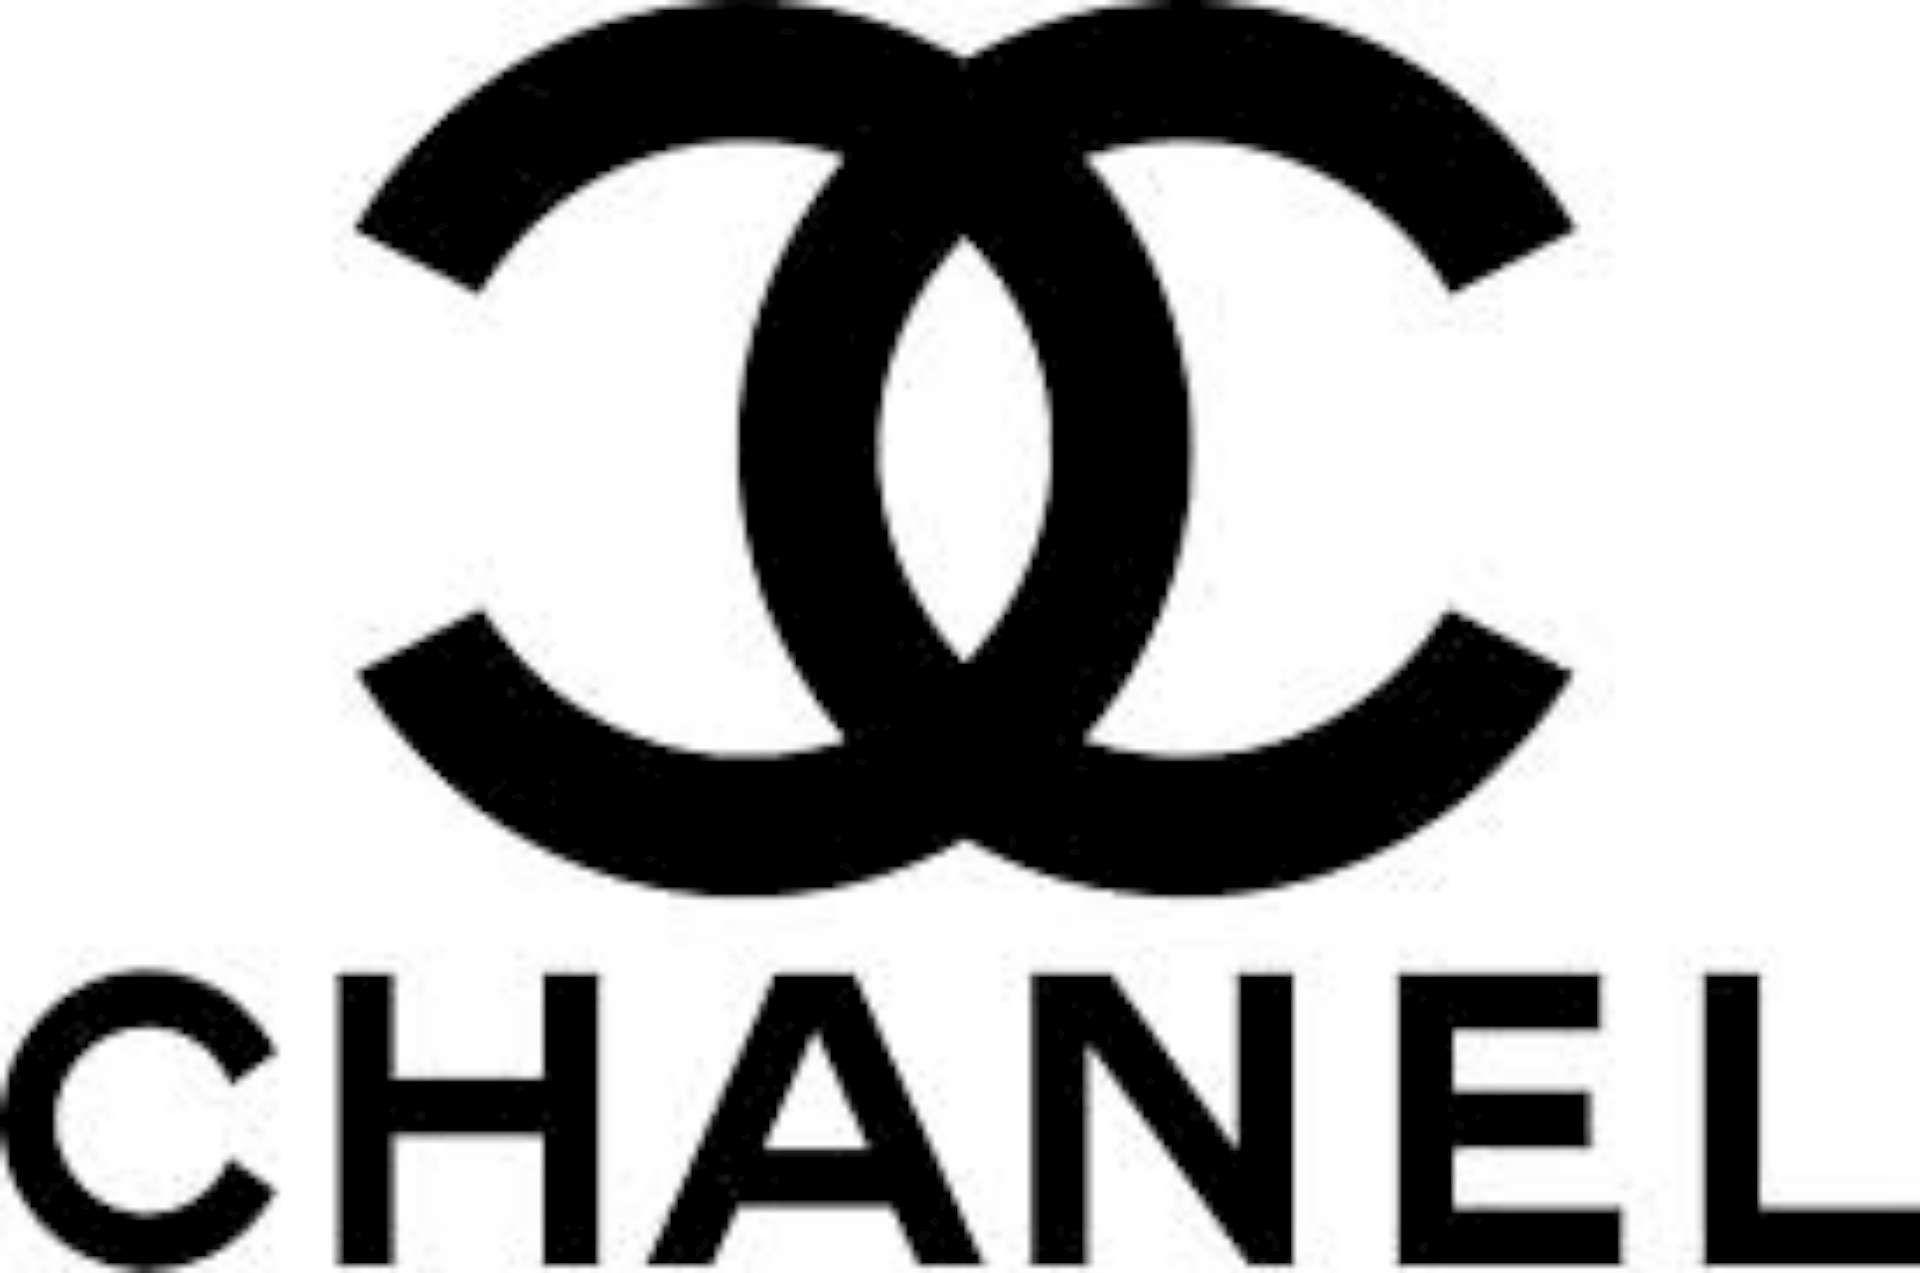 chanel logo wallpaper iphone